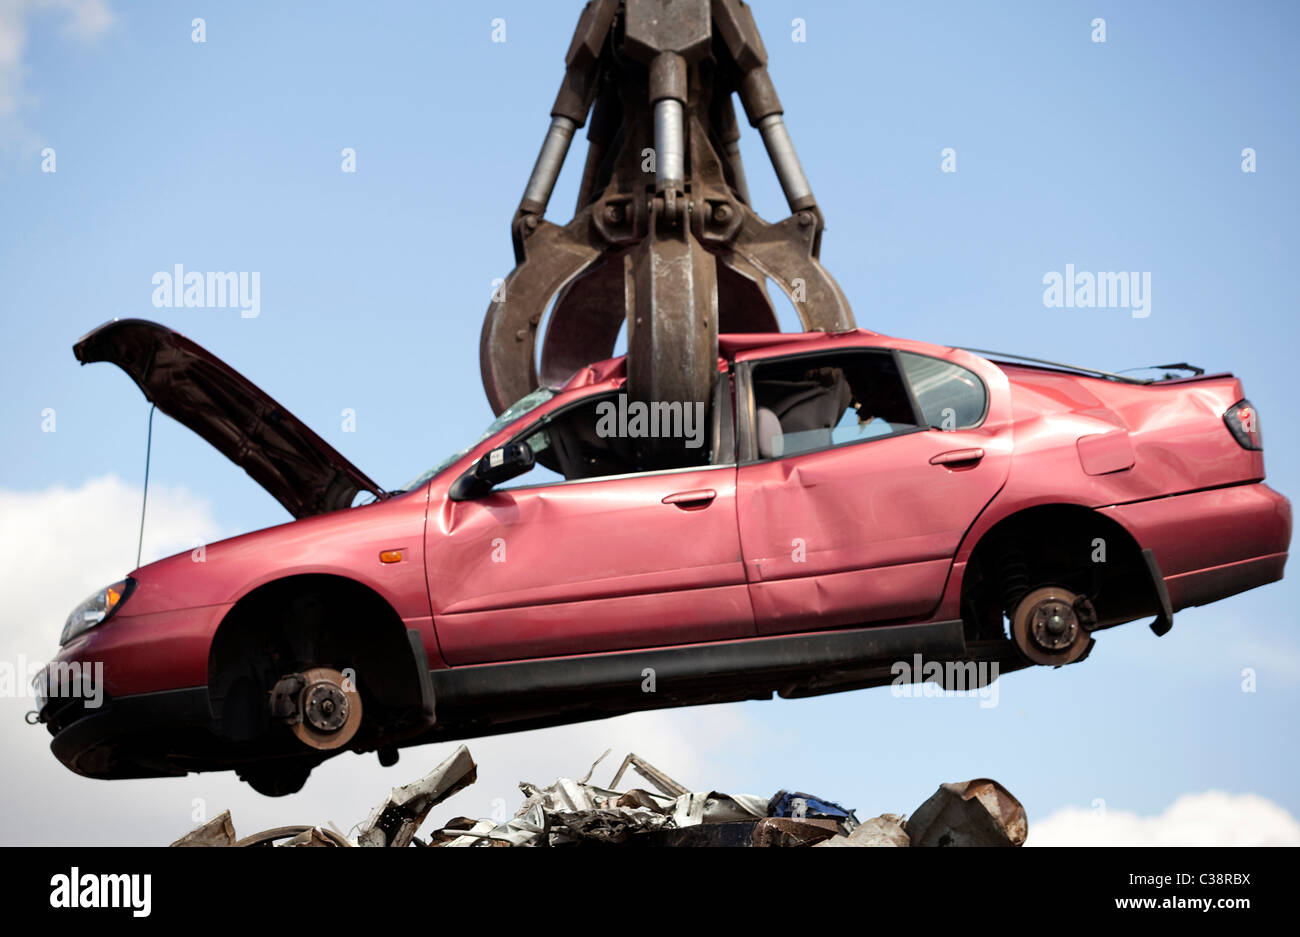 Una macchina Nissan è prelevato da una gru in un'immagine illustrativa di un scrapyard. Foto Stock